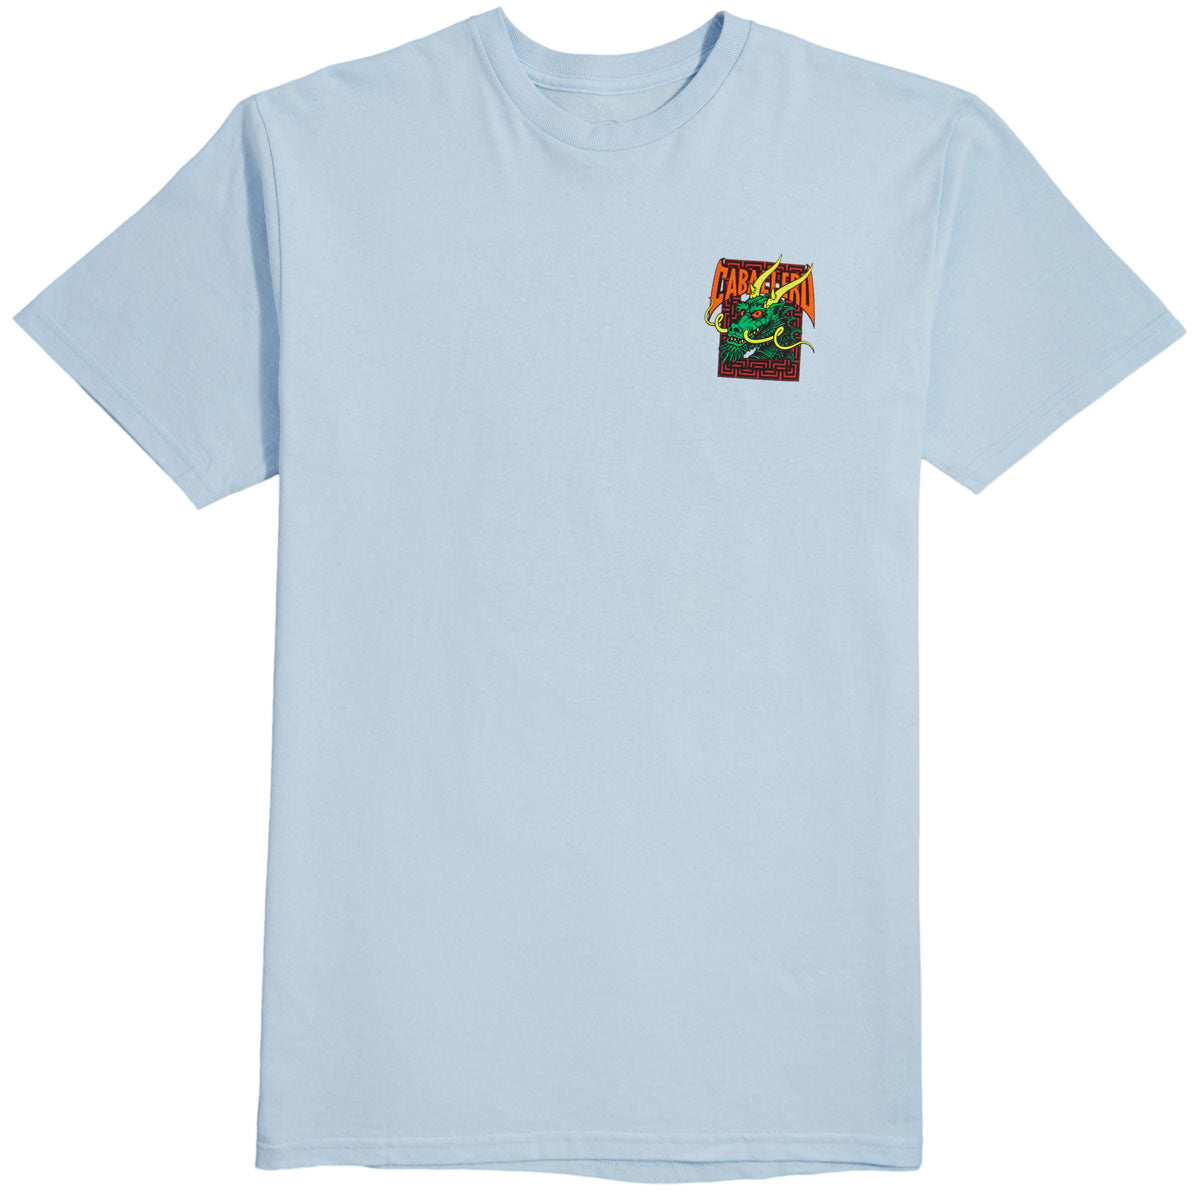 Powell-Peralta Caballero Street Dragon T-Shirt - Powder Blue image 2